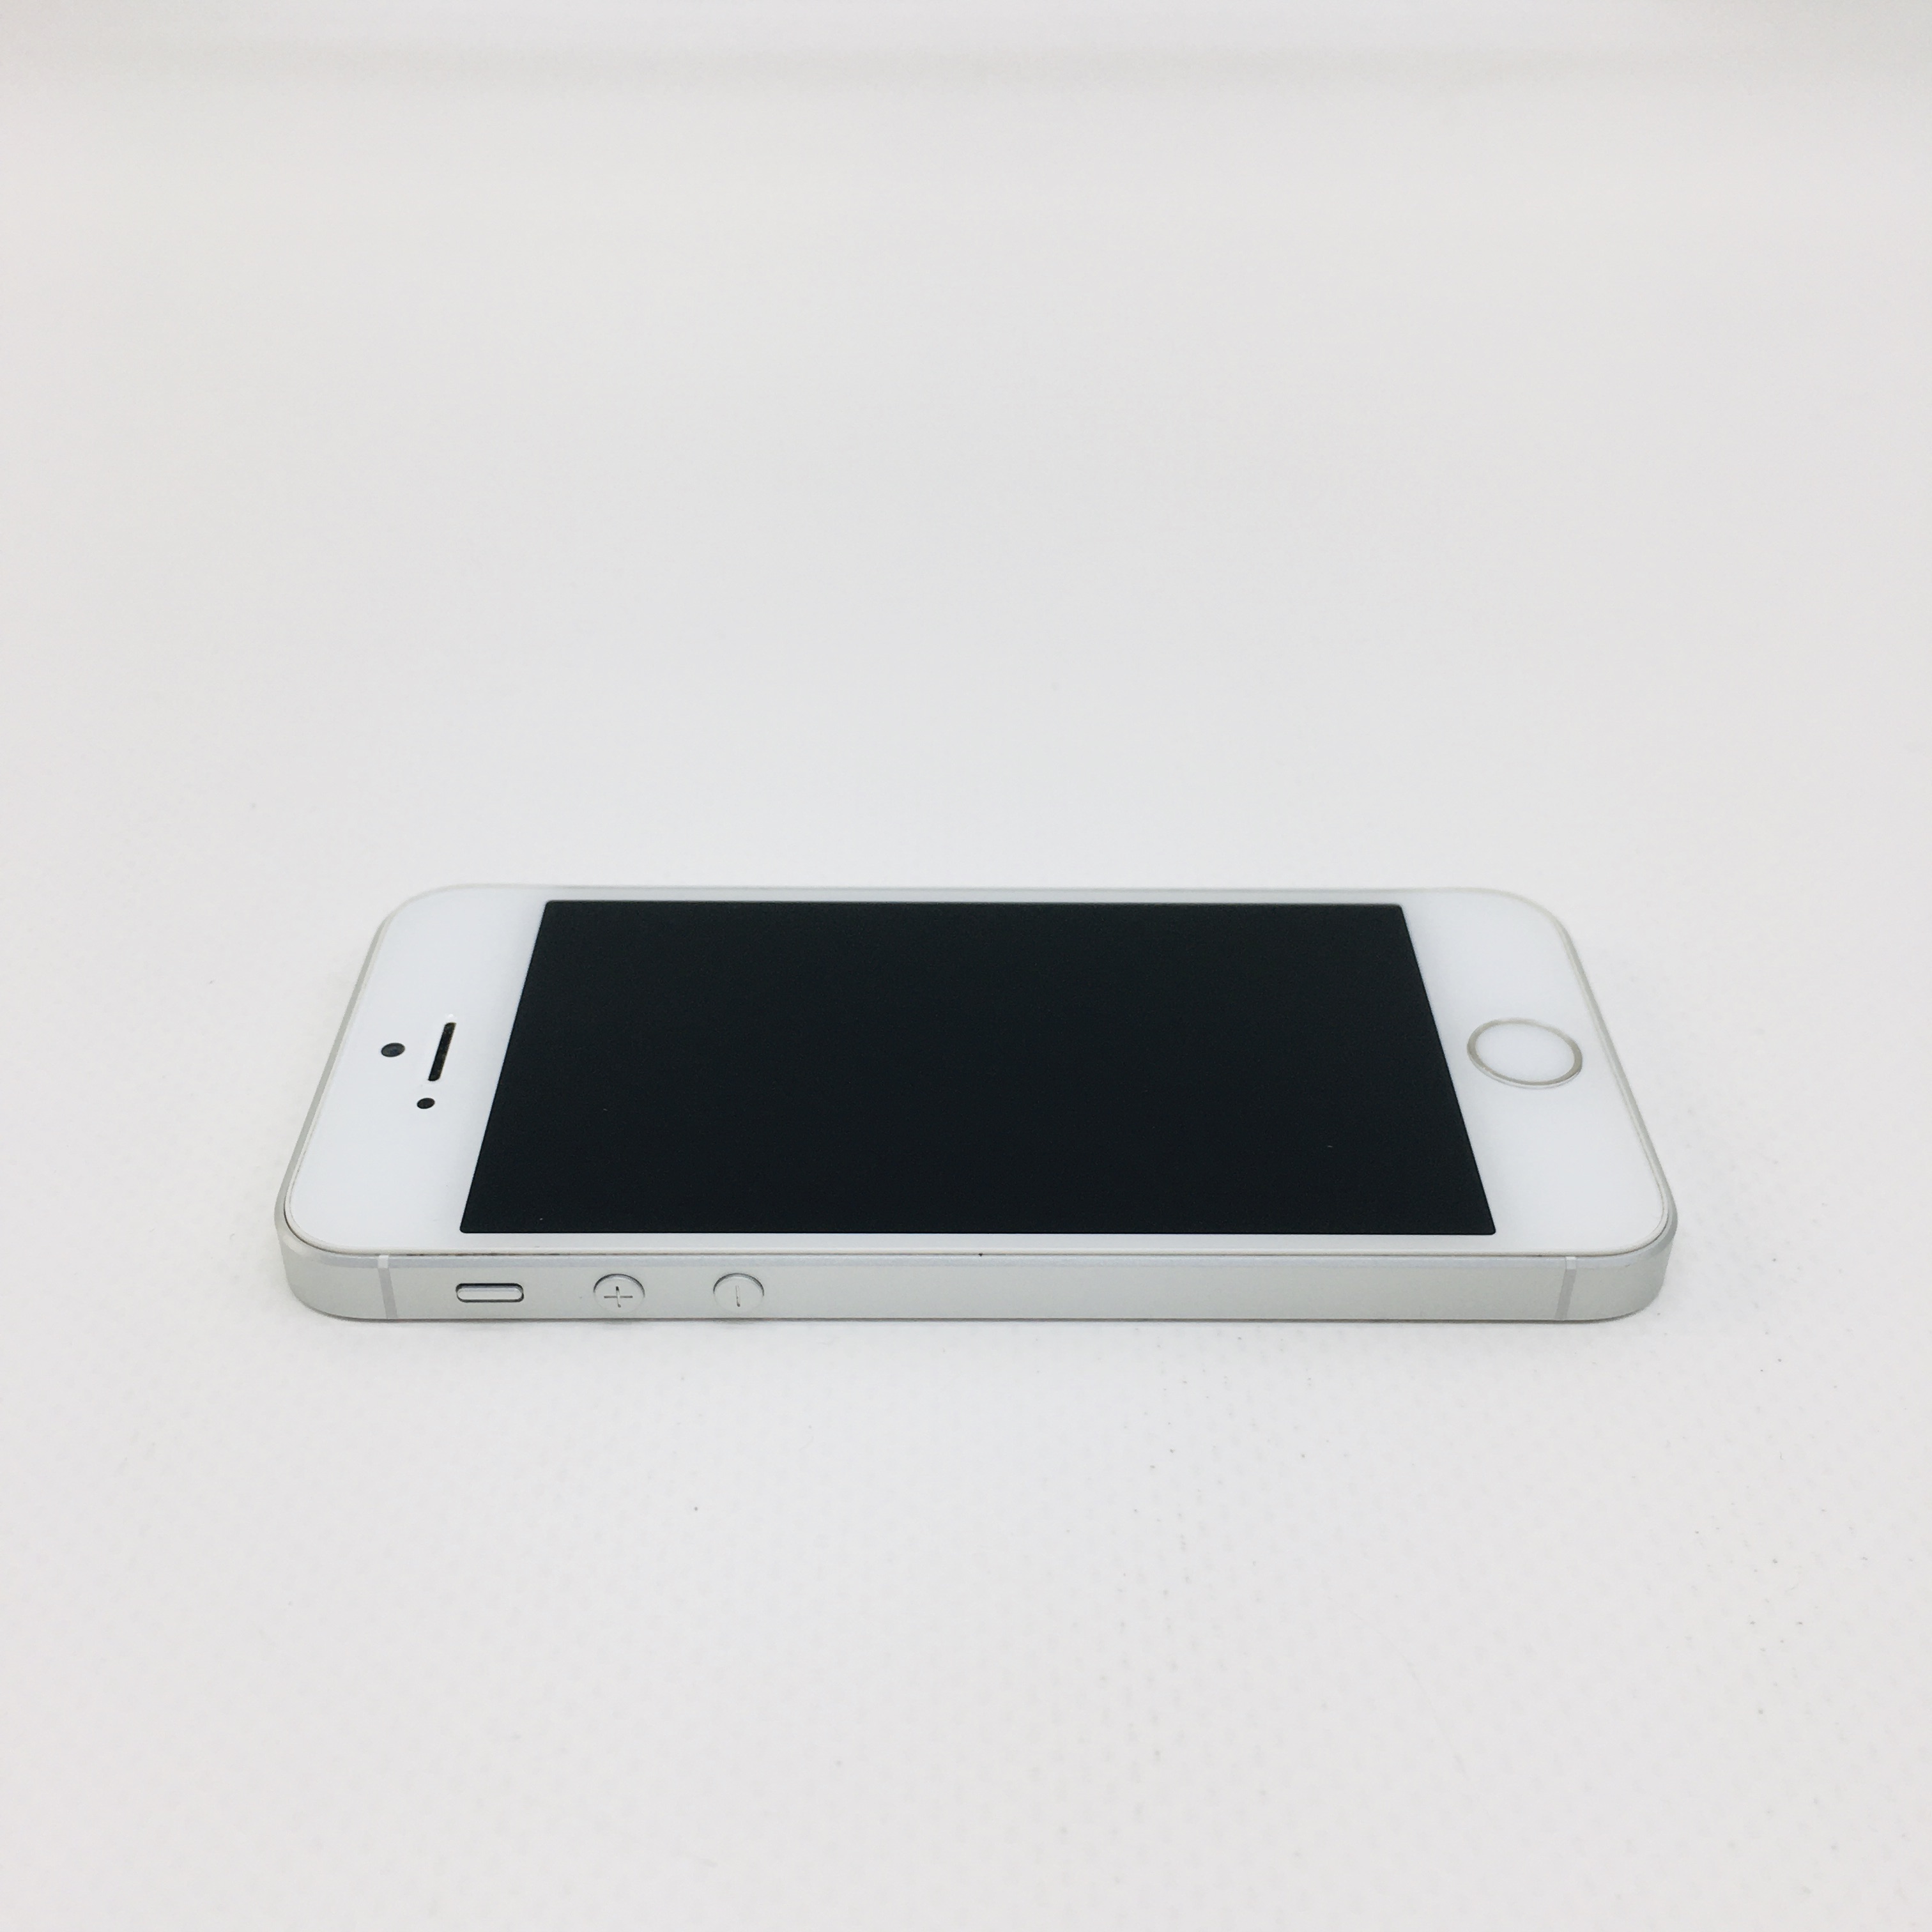 Refurbished iPhone SE 32GB / Silver - mResell.com.au